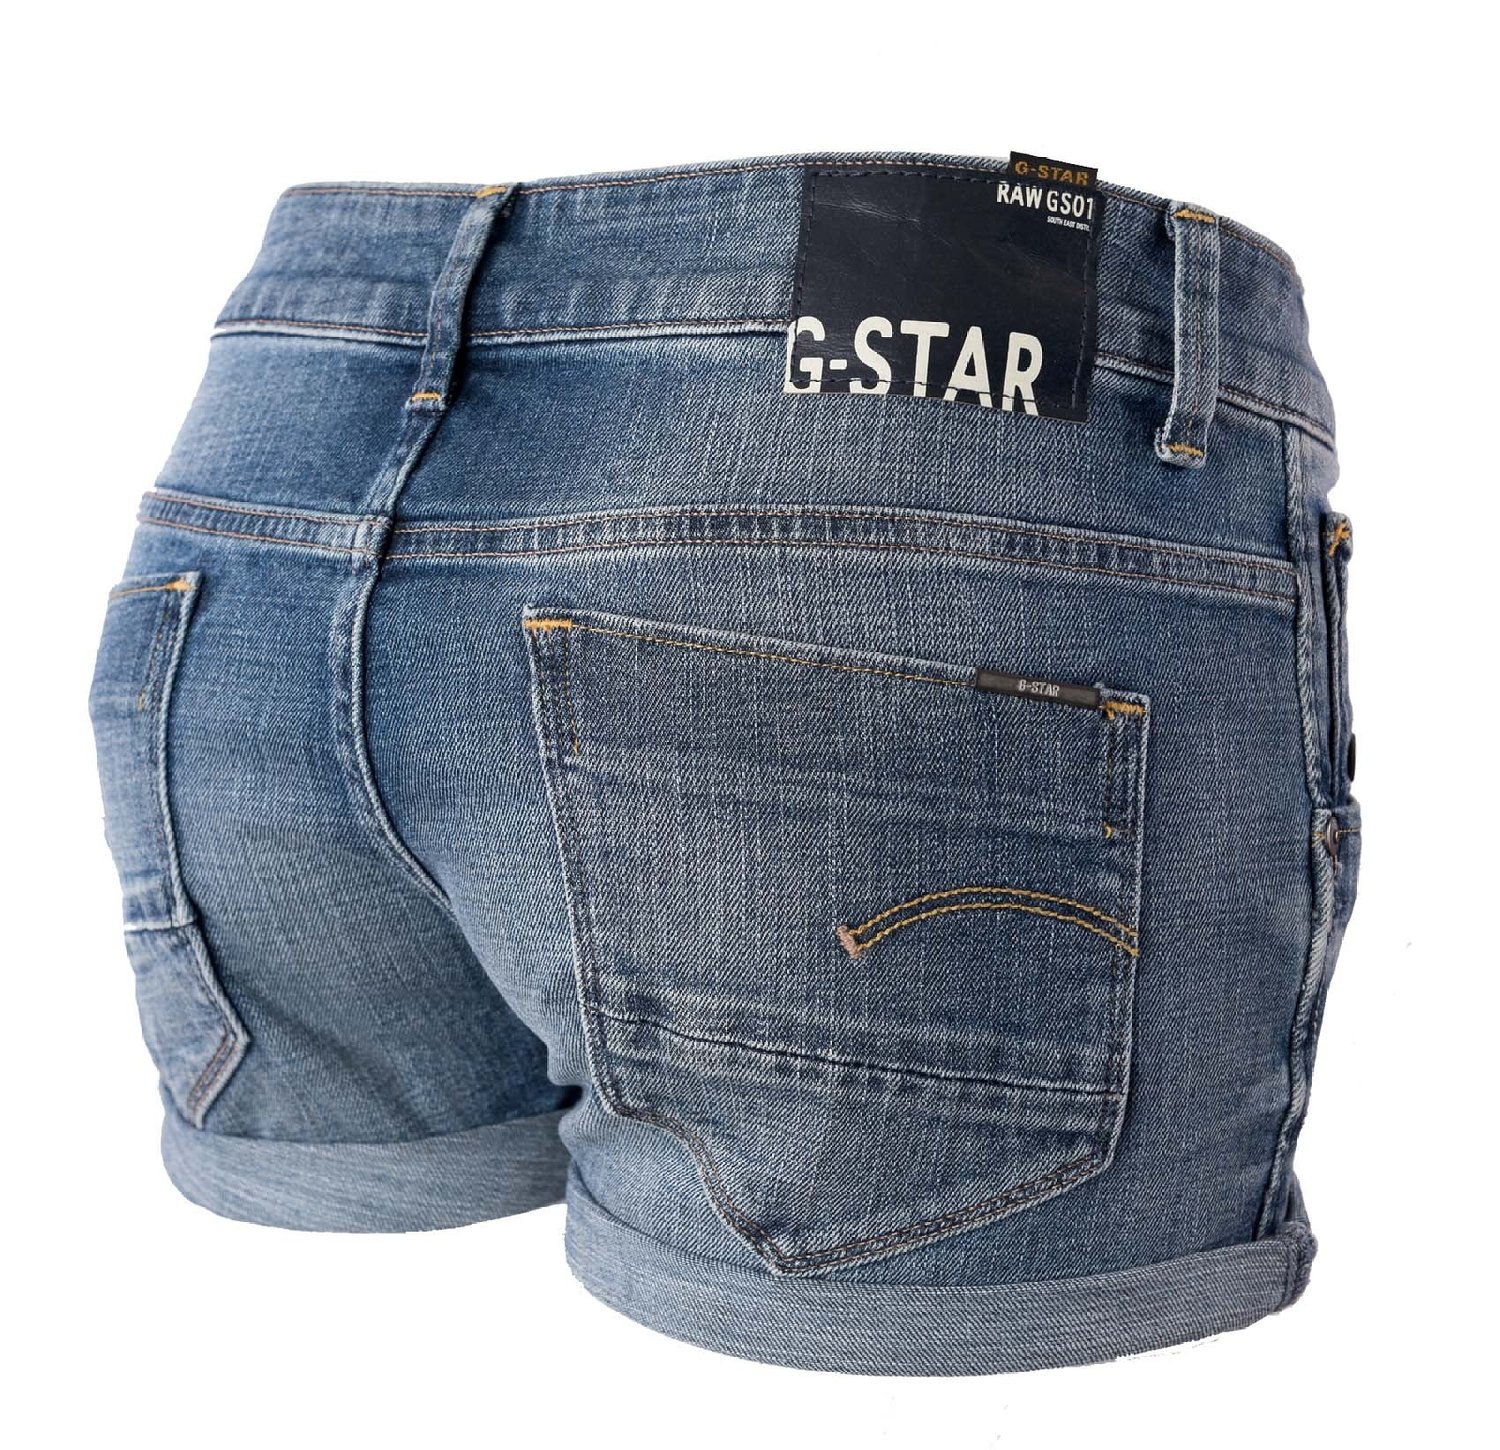 g star shorts womens